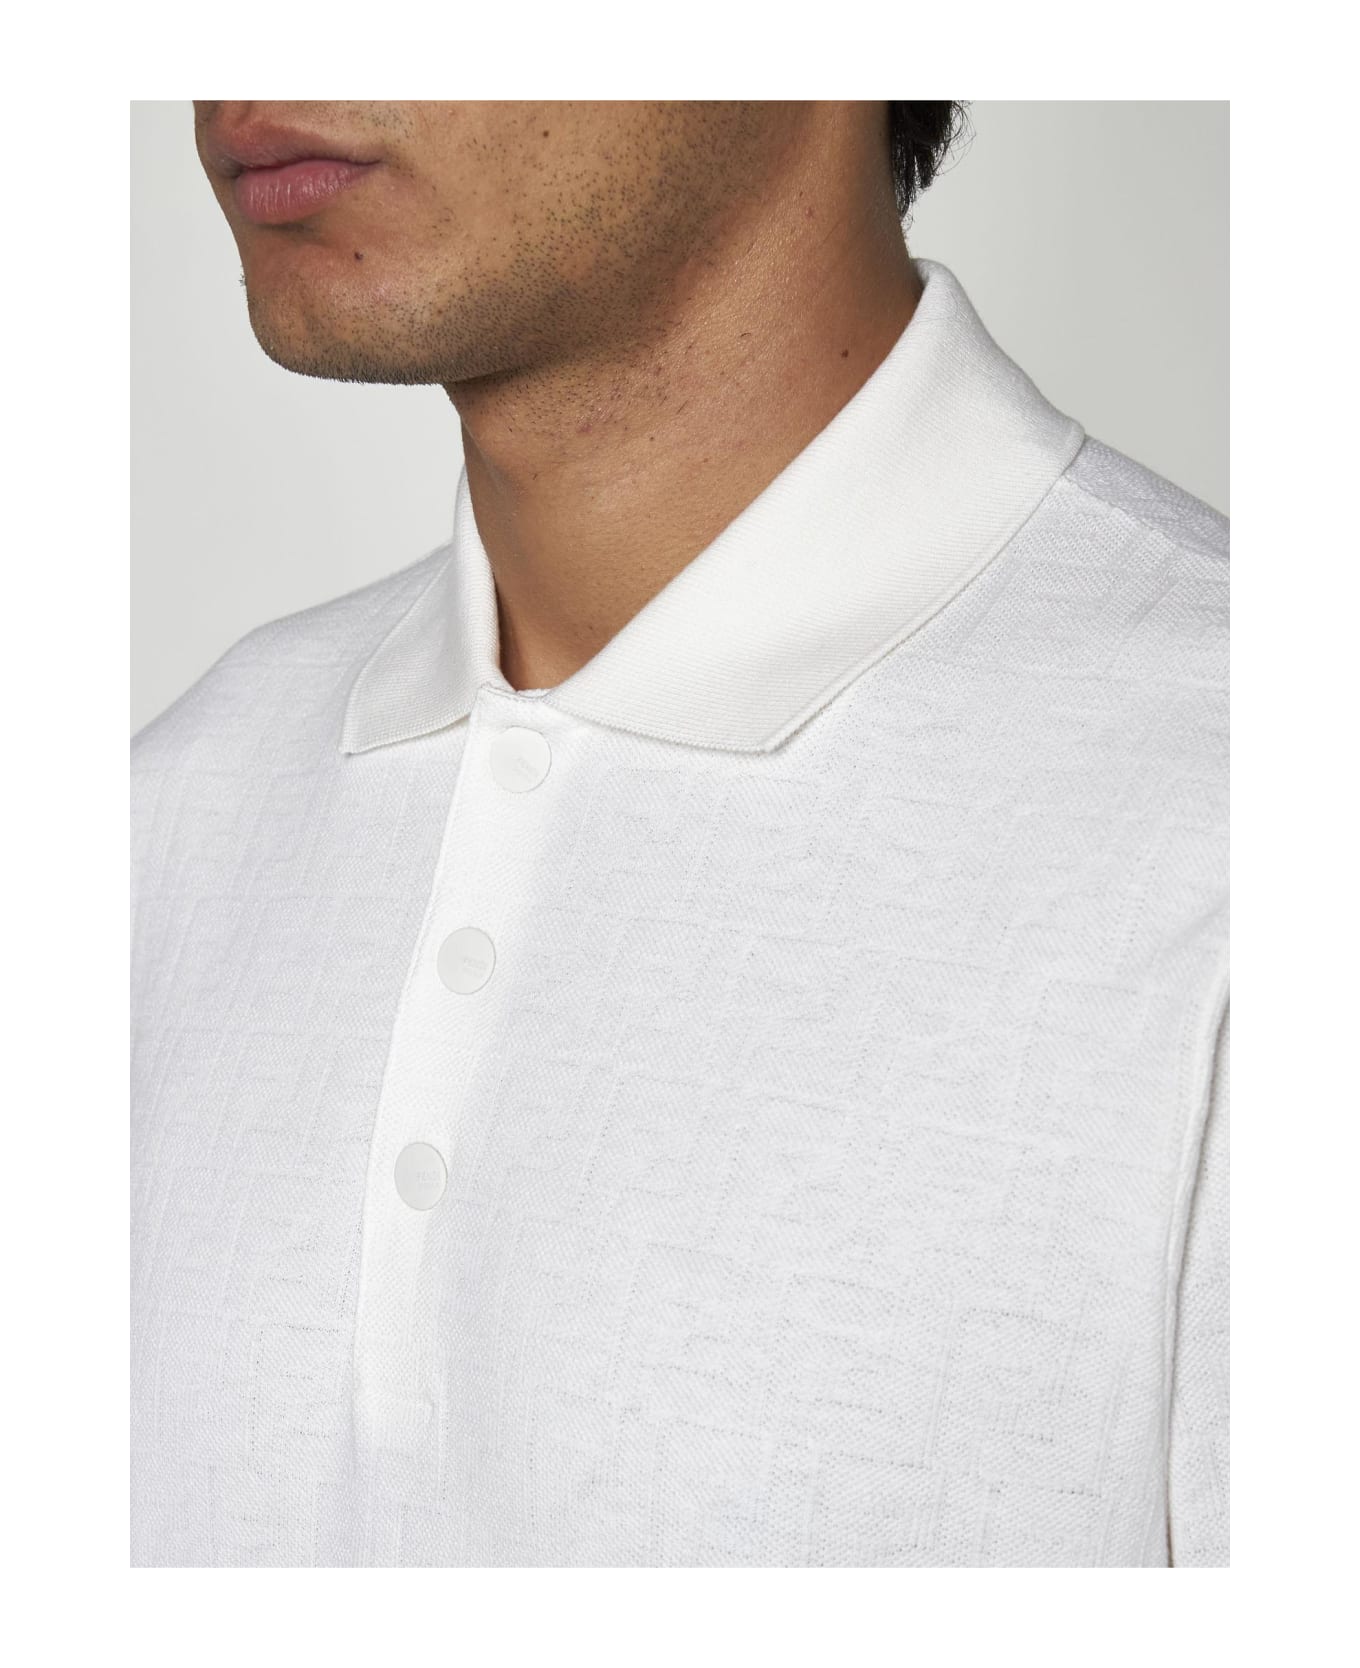 Fendi Pique Cotton Polo Shirt - Naturale